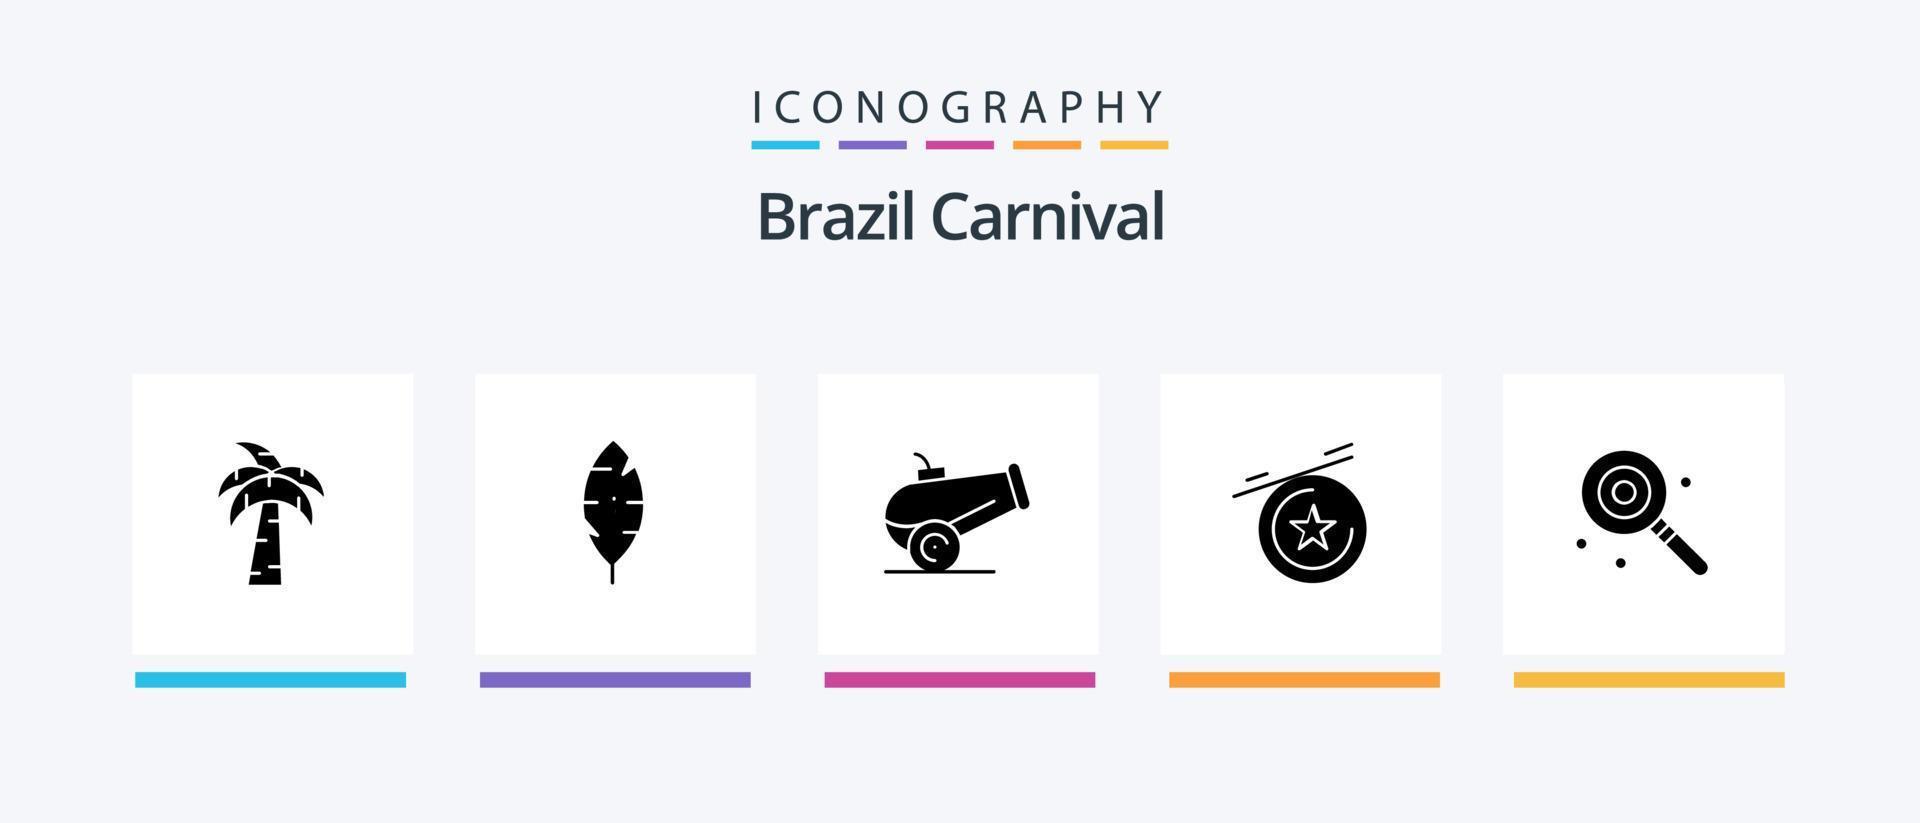 Brasilien karneval glyf 5 ikon packa Inklusive brasiliansk. vapen. bläck. kanon. karneval. kreativ ikoner design vektor